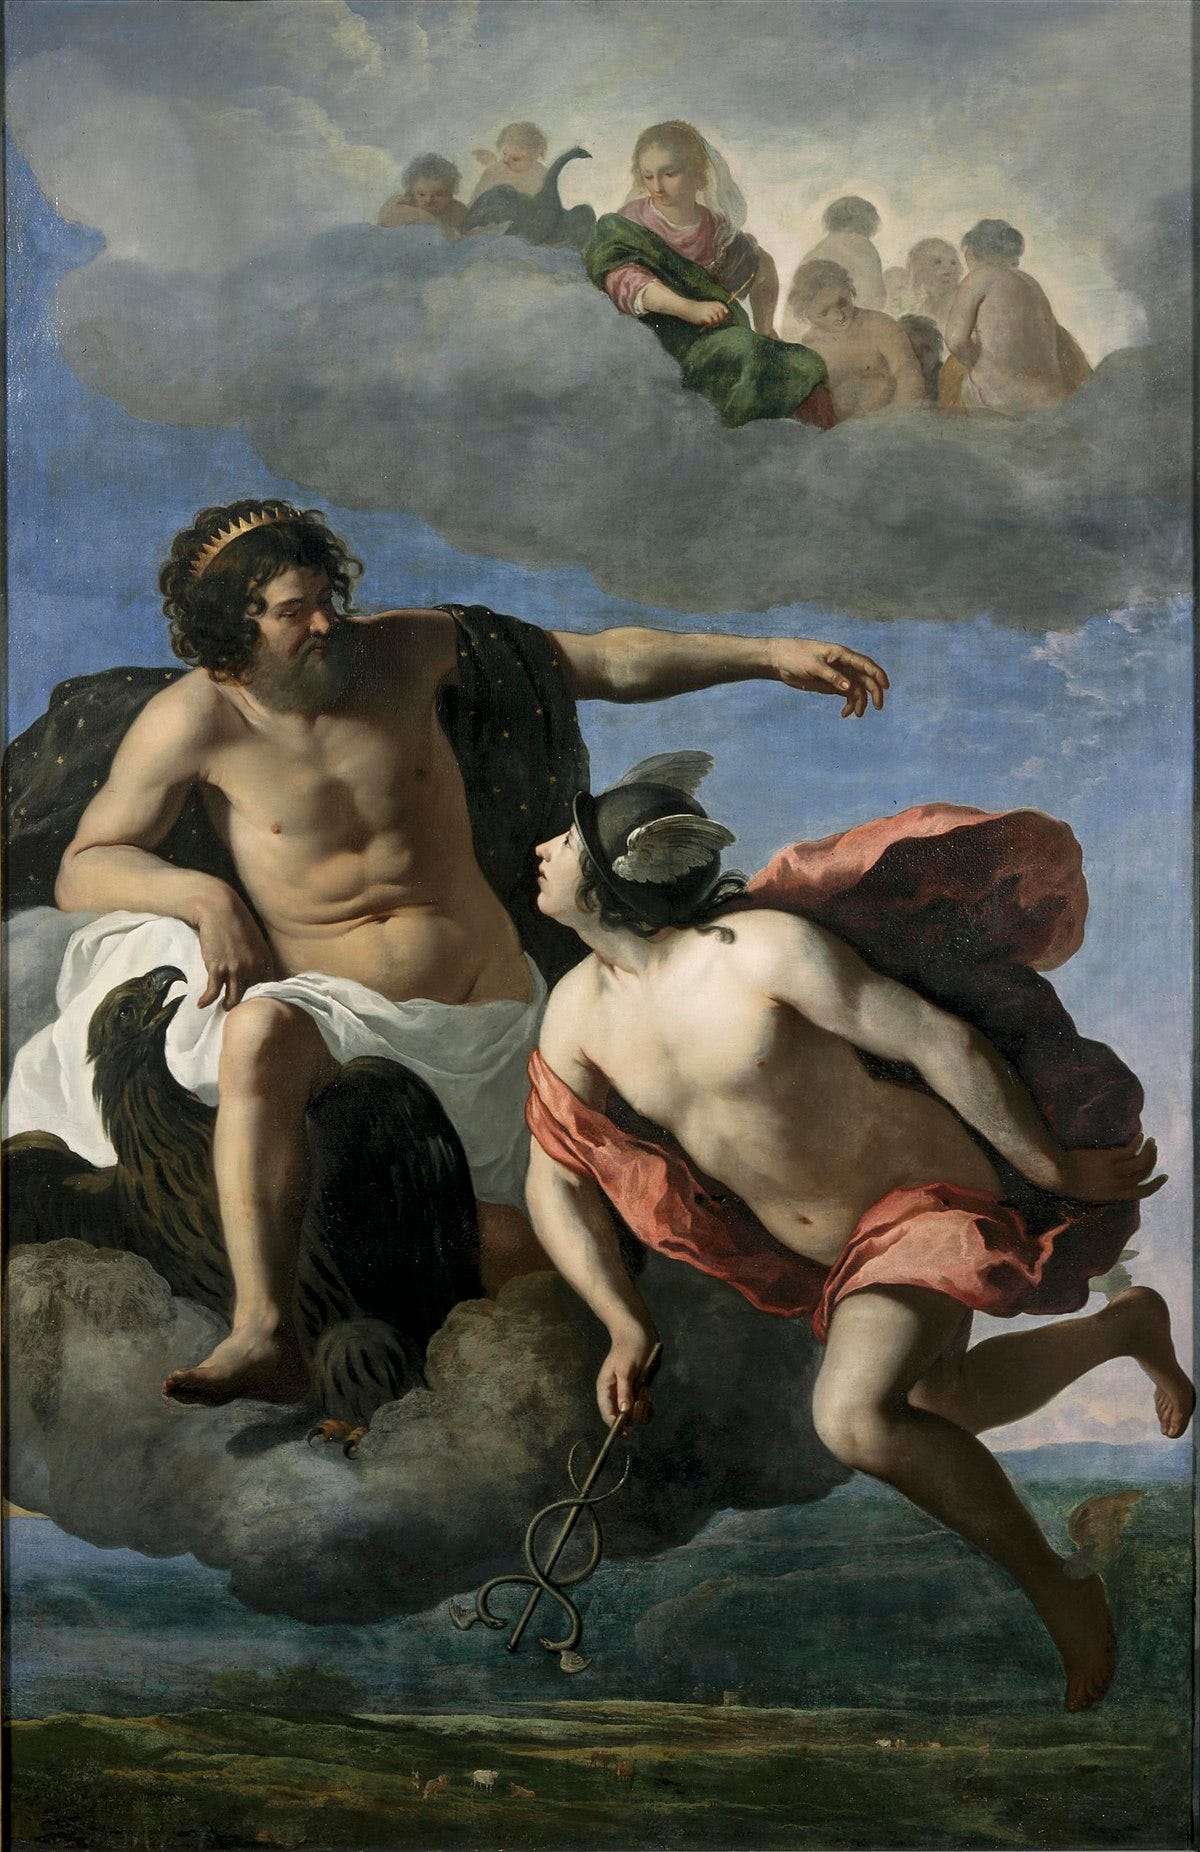 File:Jupiter geeft Mercurius opdracht Argus te doden Centraal Museum  2559.jpg - Wikimedia Commons